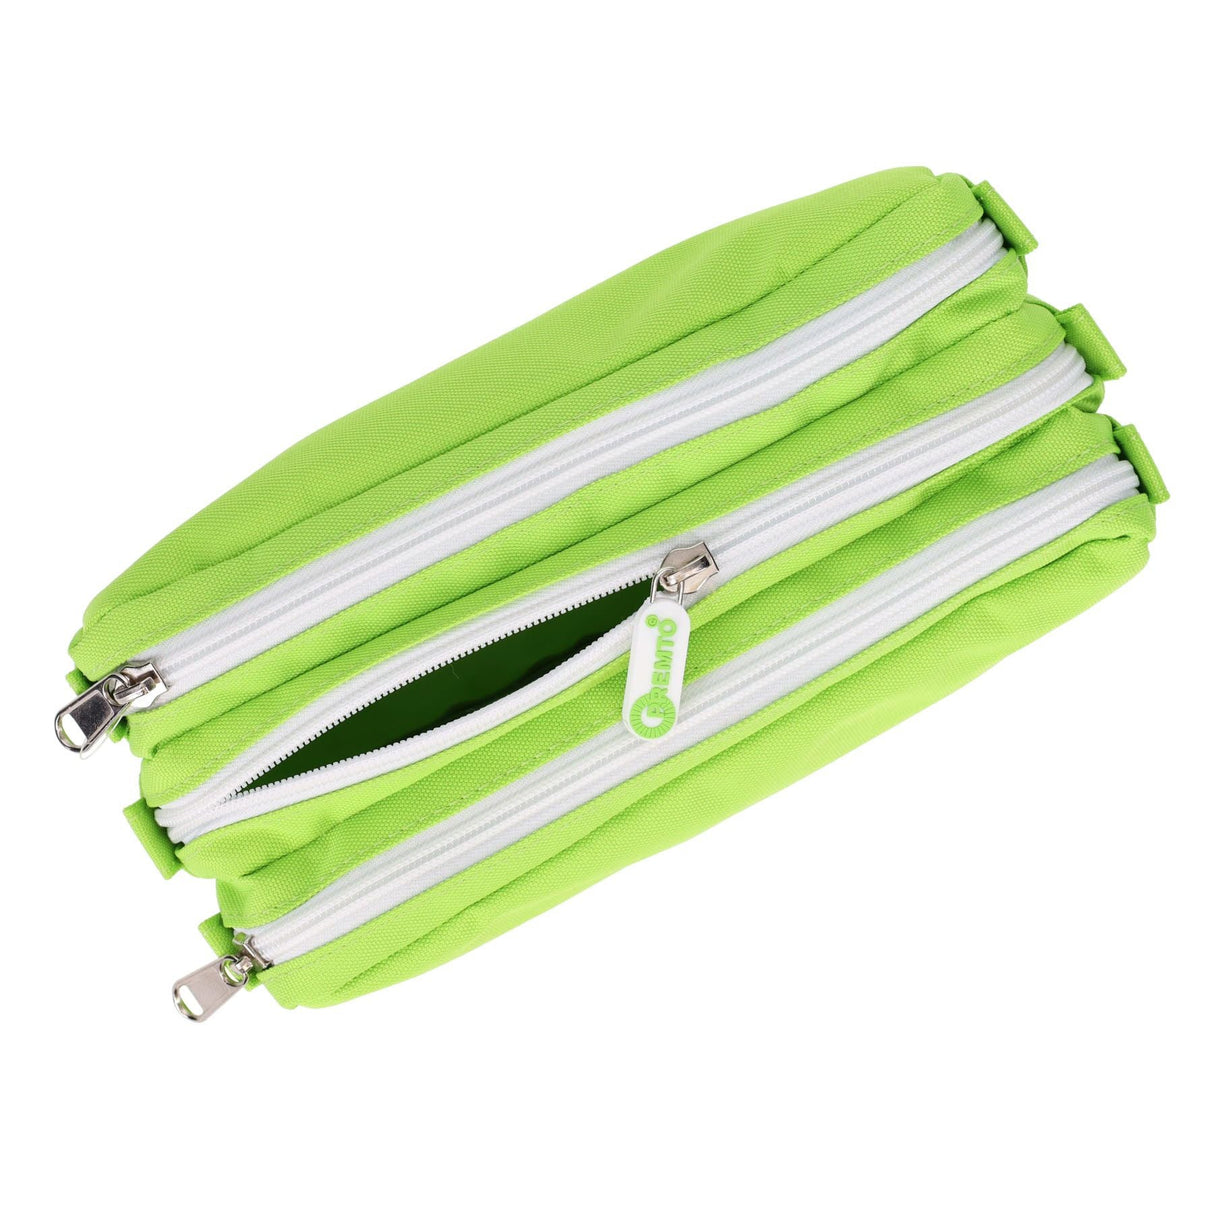 Premto 3 Pocket Pencil Case - Caterpillar Green | Stationery Shop UK